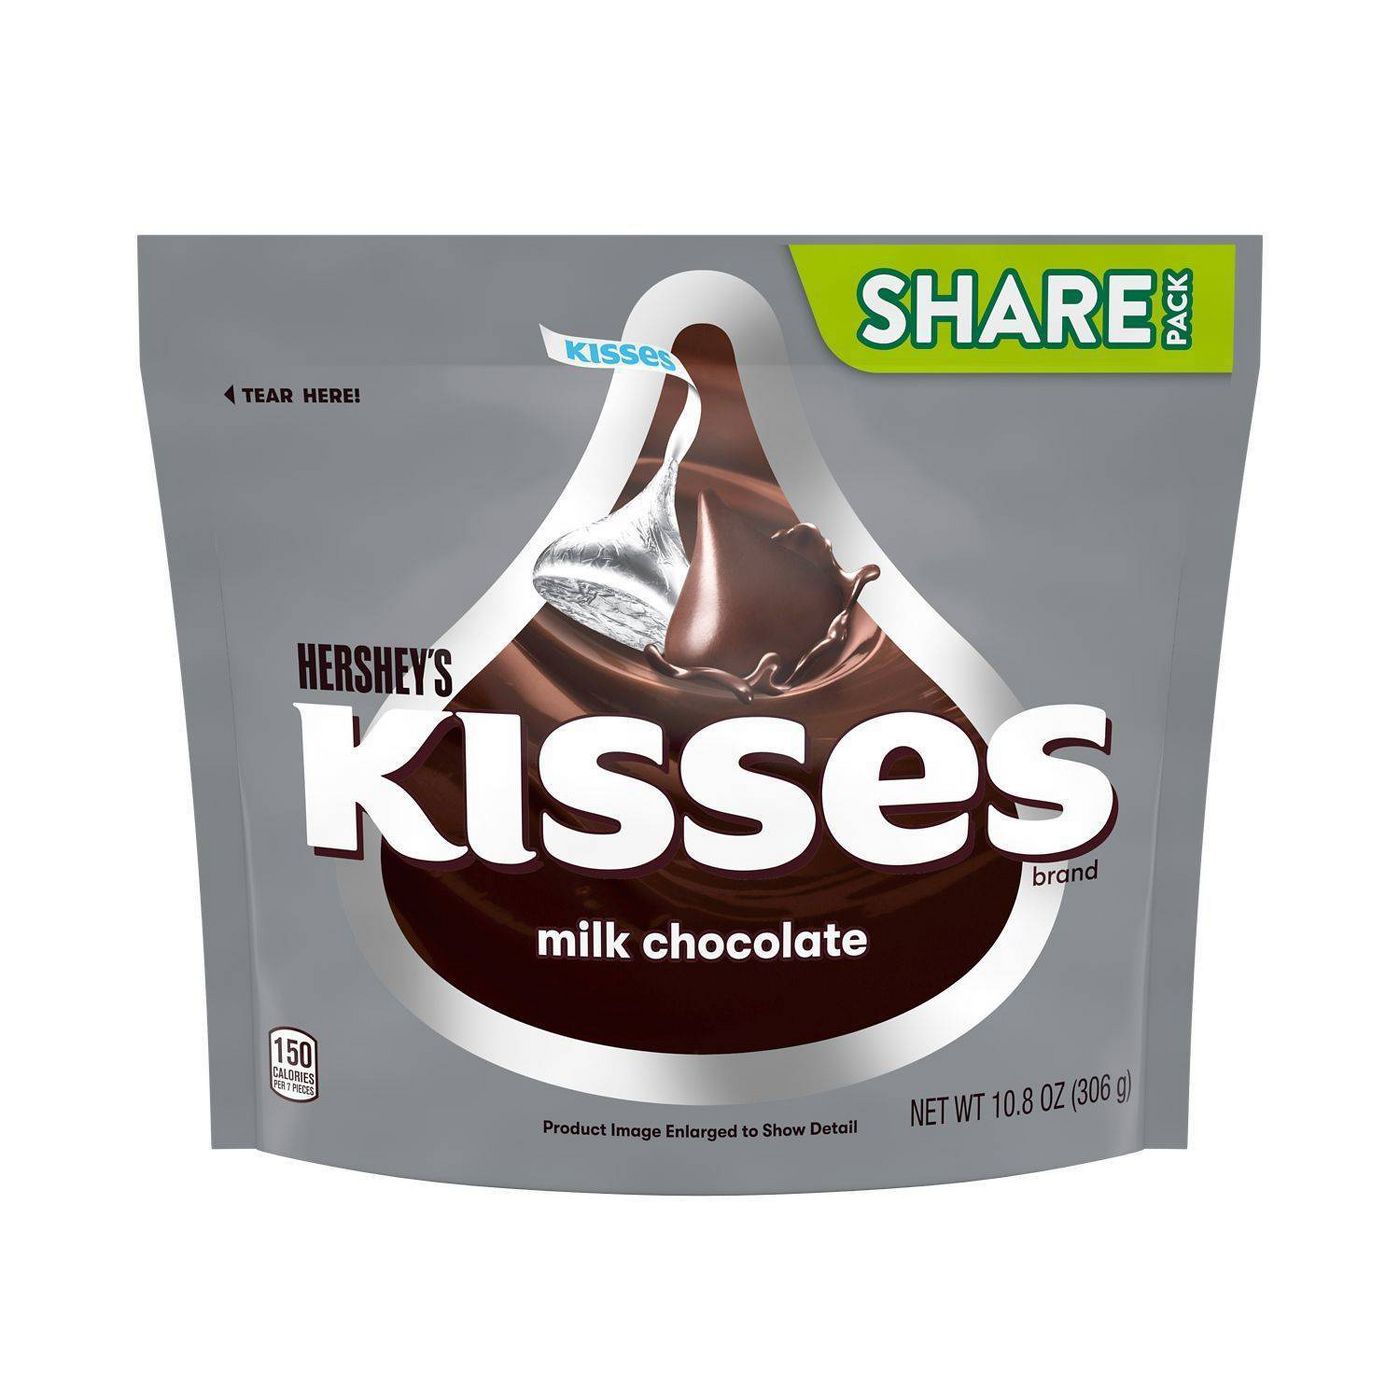 TÚI 306g SOCOLA SỮA Hershey s Kisses Milk Chocolate Candy, Share Bag 10.8oz